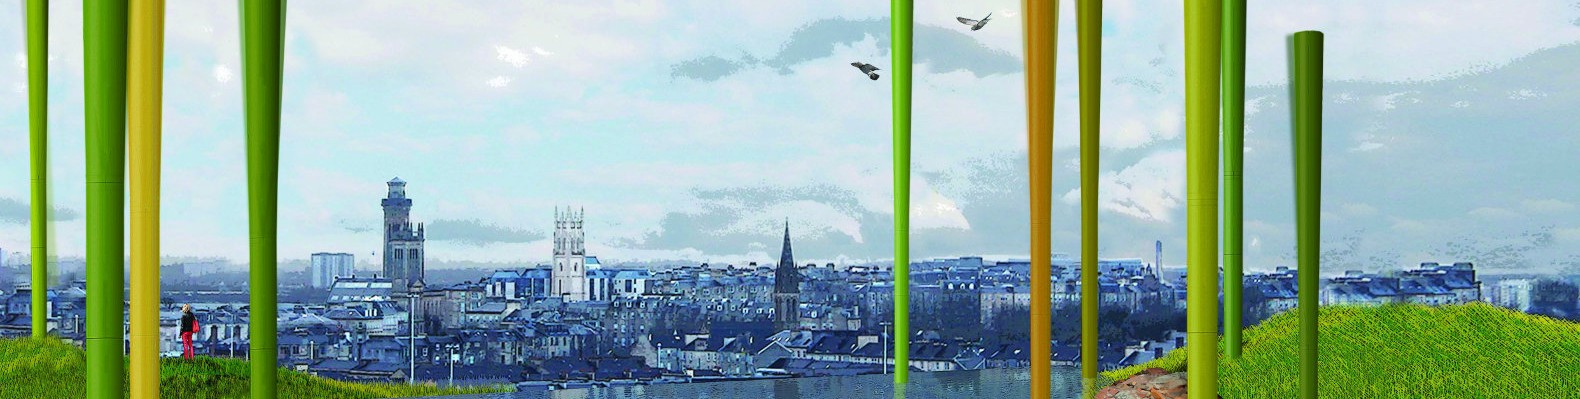 LAGI Glasgow showcases new energy art designs along Scotland’s canal banks